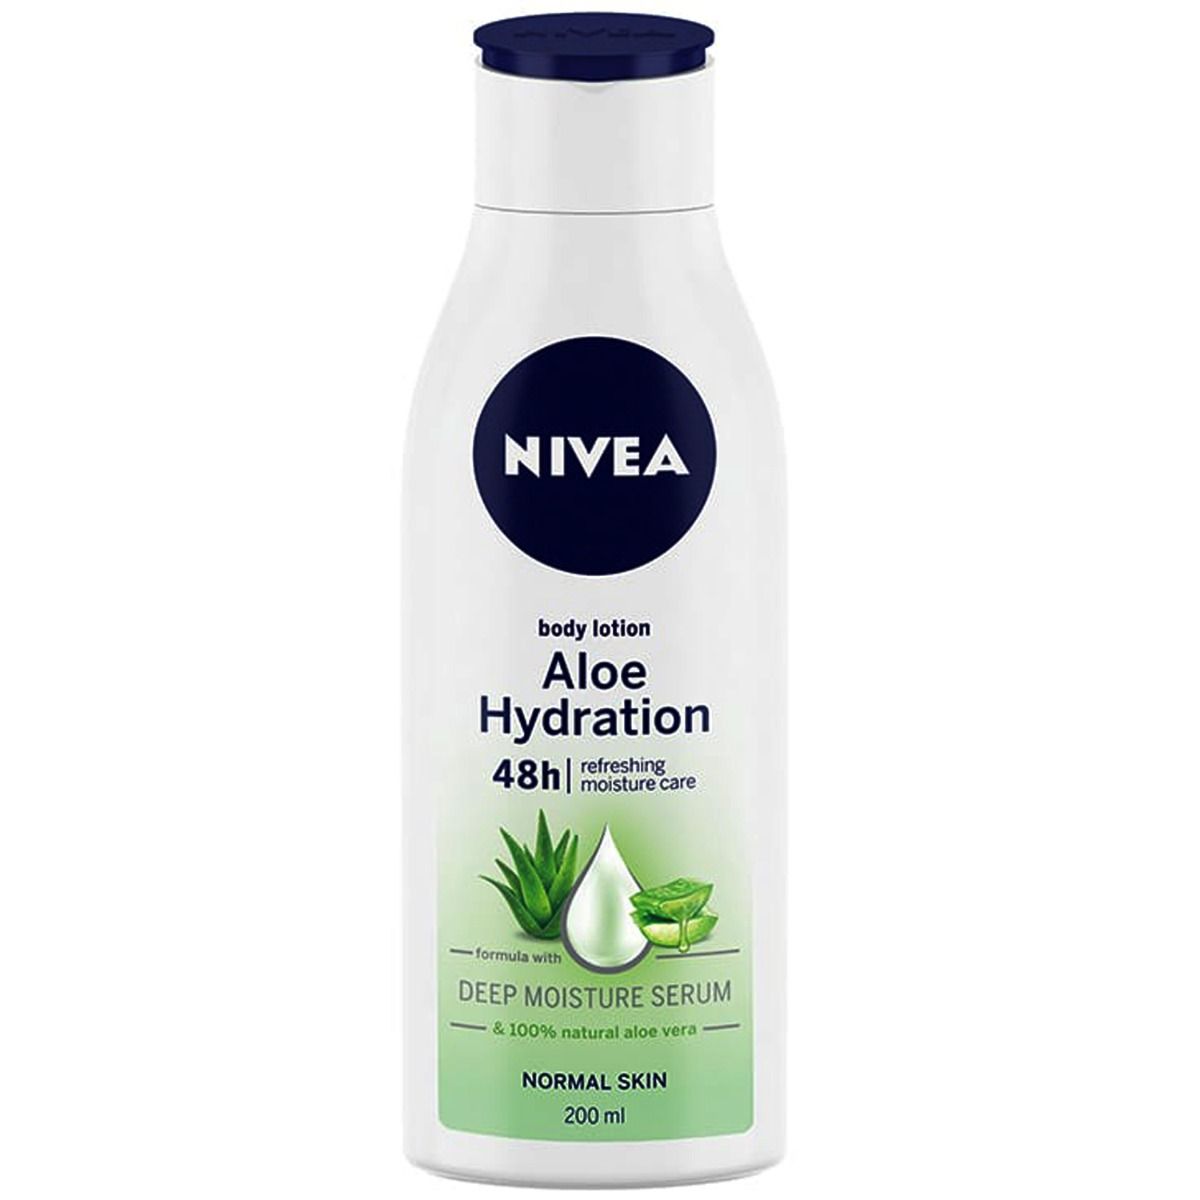 Nivea Aloe Hydration Body Lotion, 200 ml, Pack of 1 